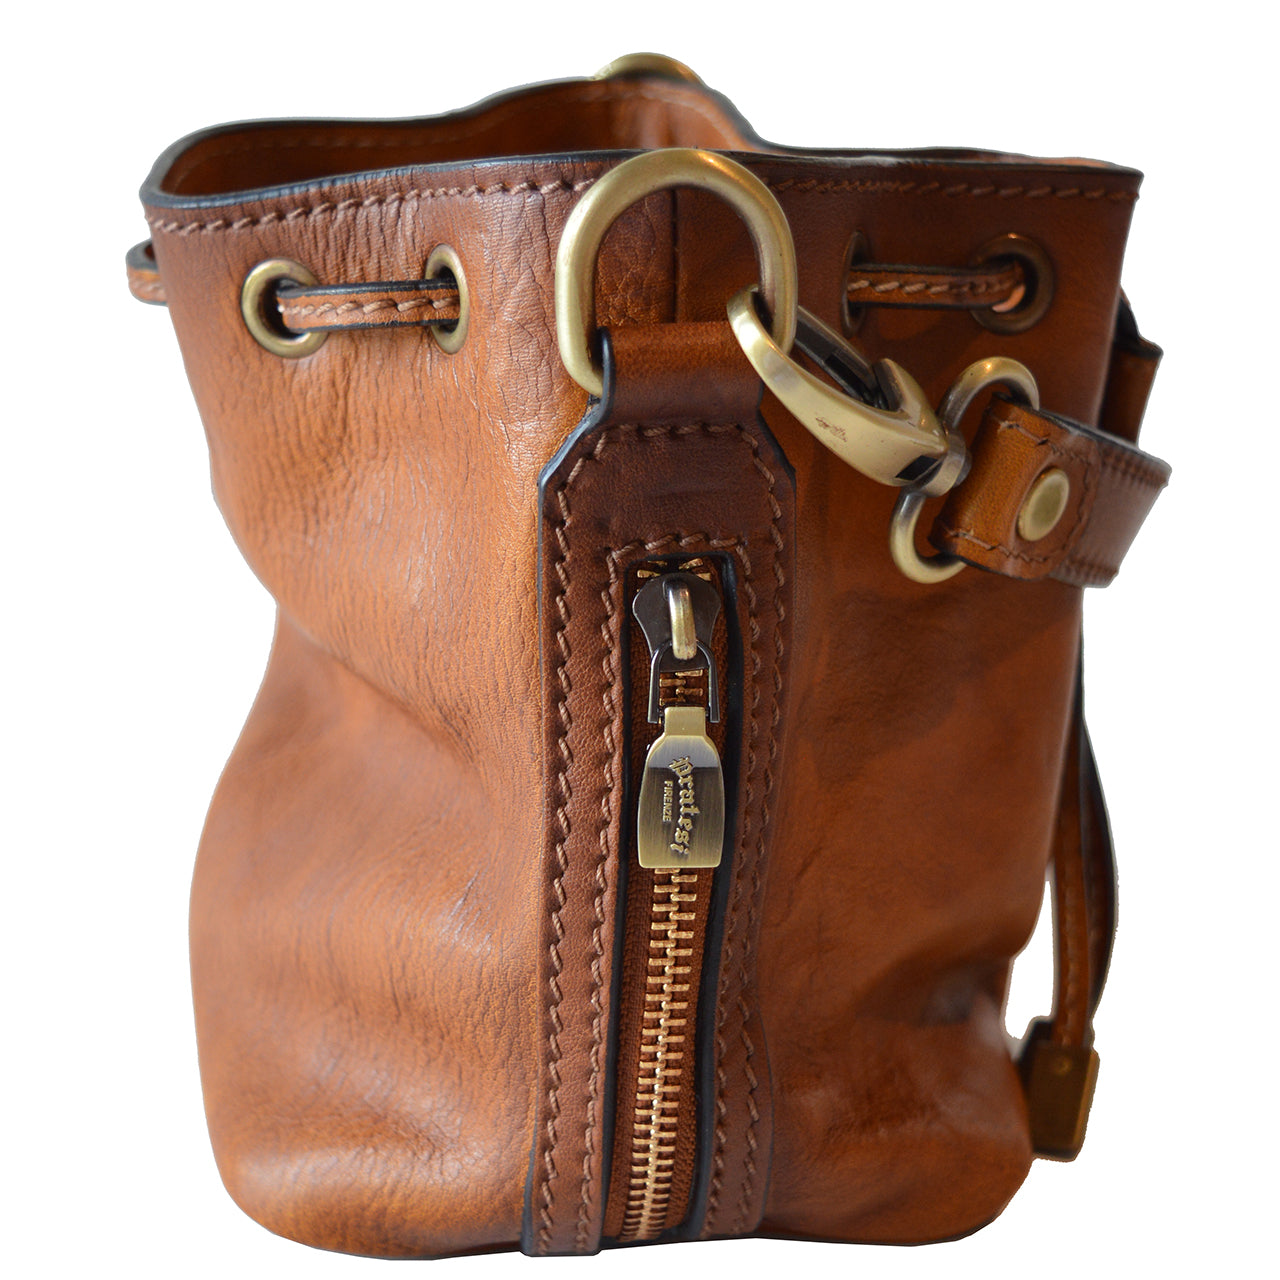 Pratesi Sorano Small Woman Bag in genuine Italian leather - Sorano Chianti